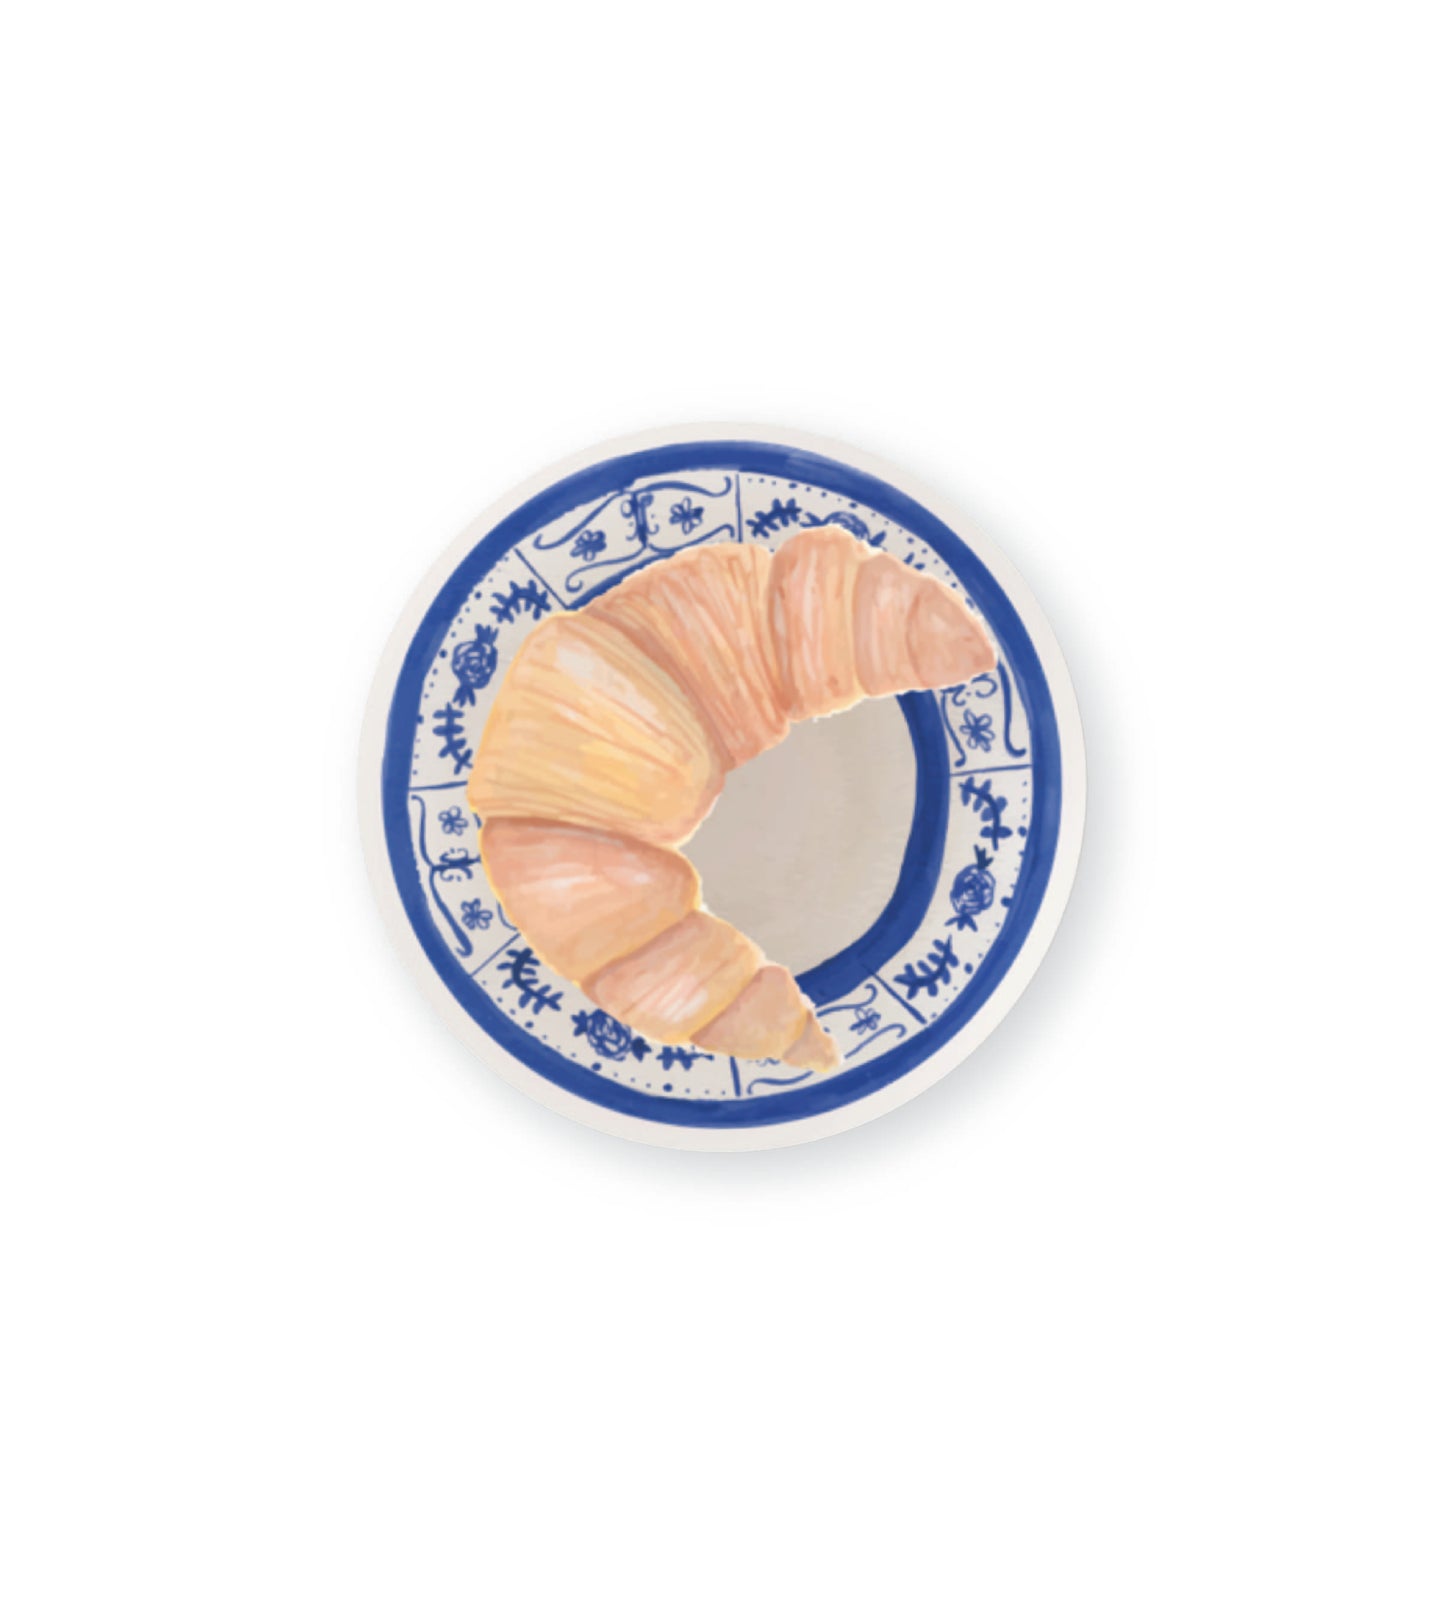 Croissant Plate Sticker